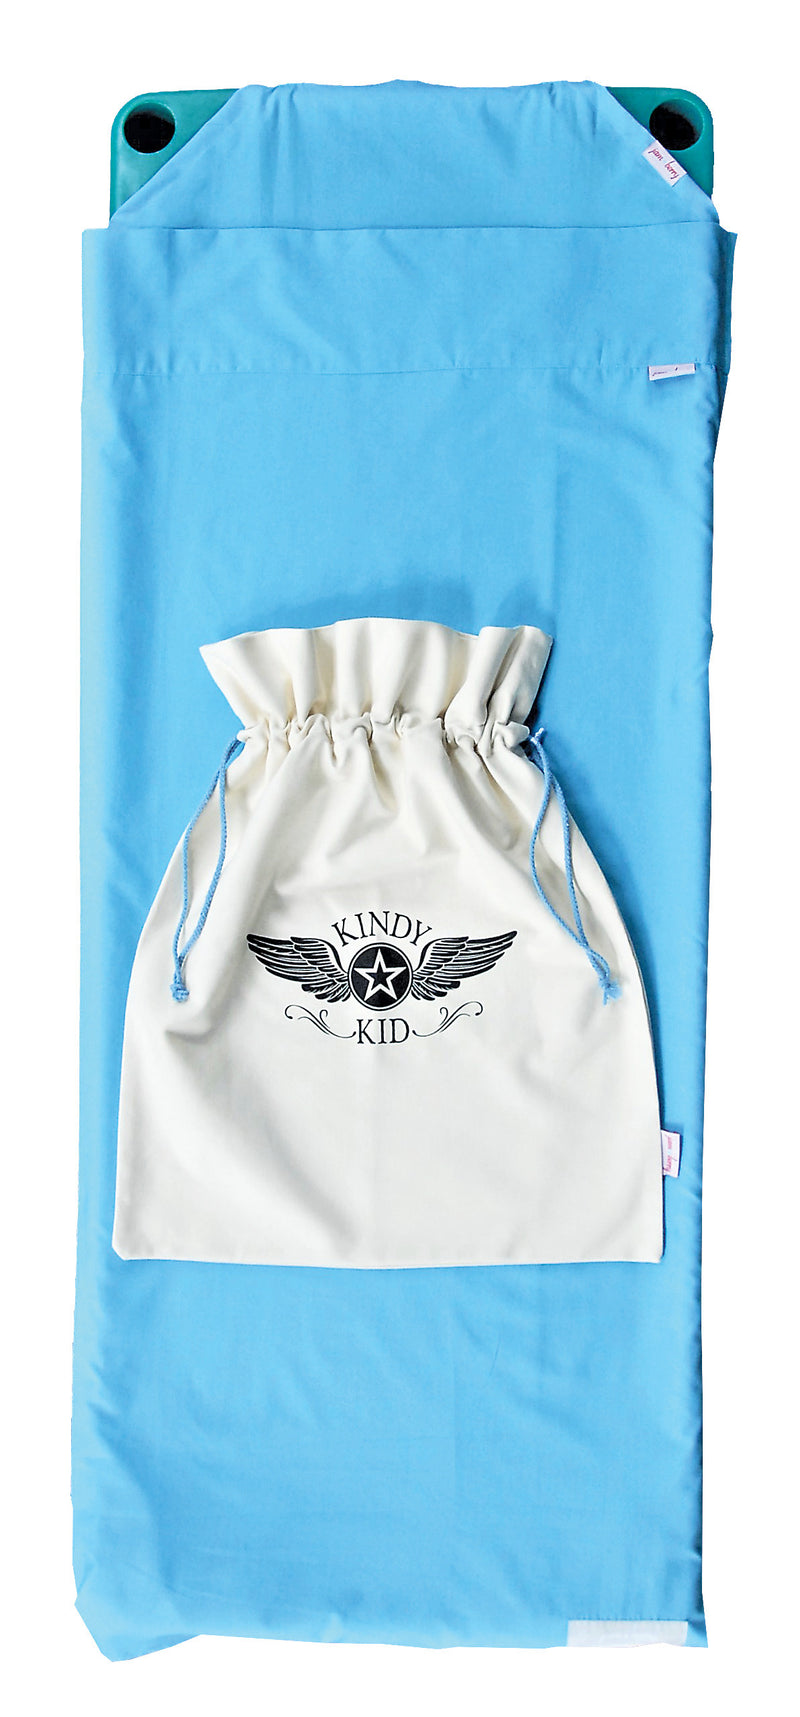 Jewel Pack - Eco Natural - Plain sheets + logo calico bag + pen